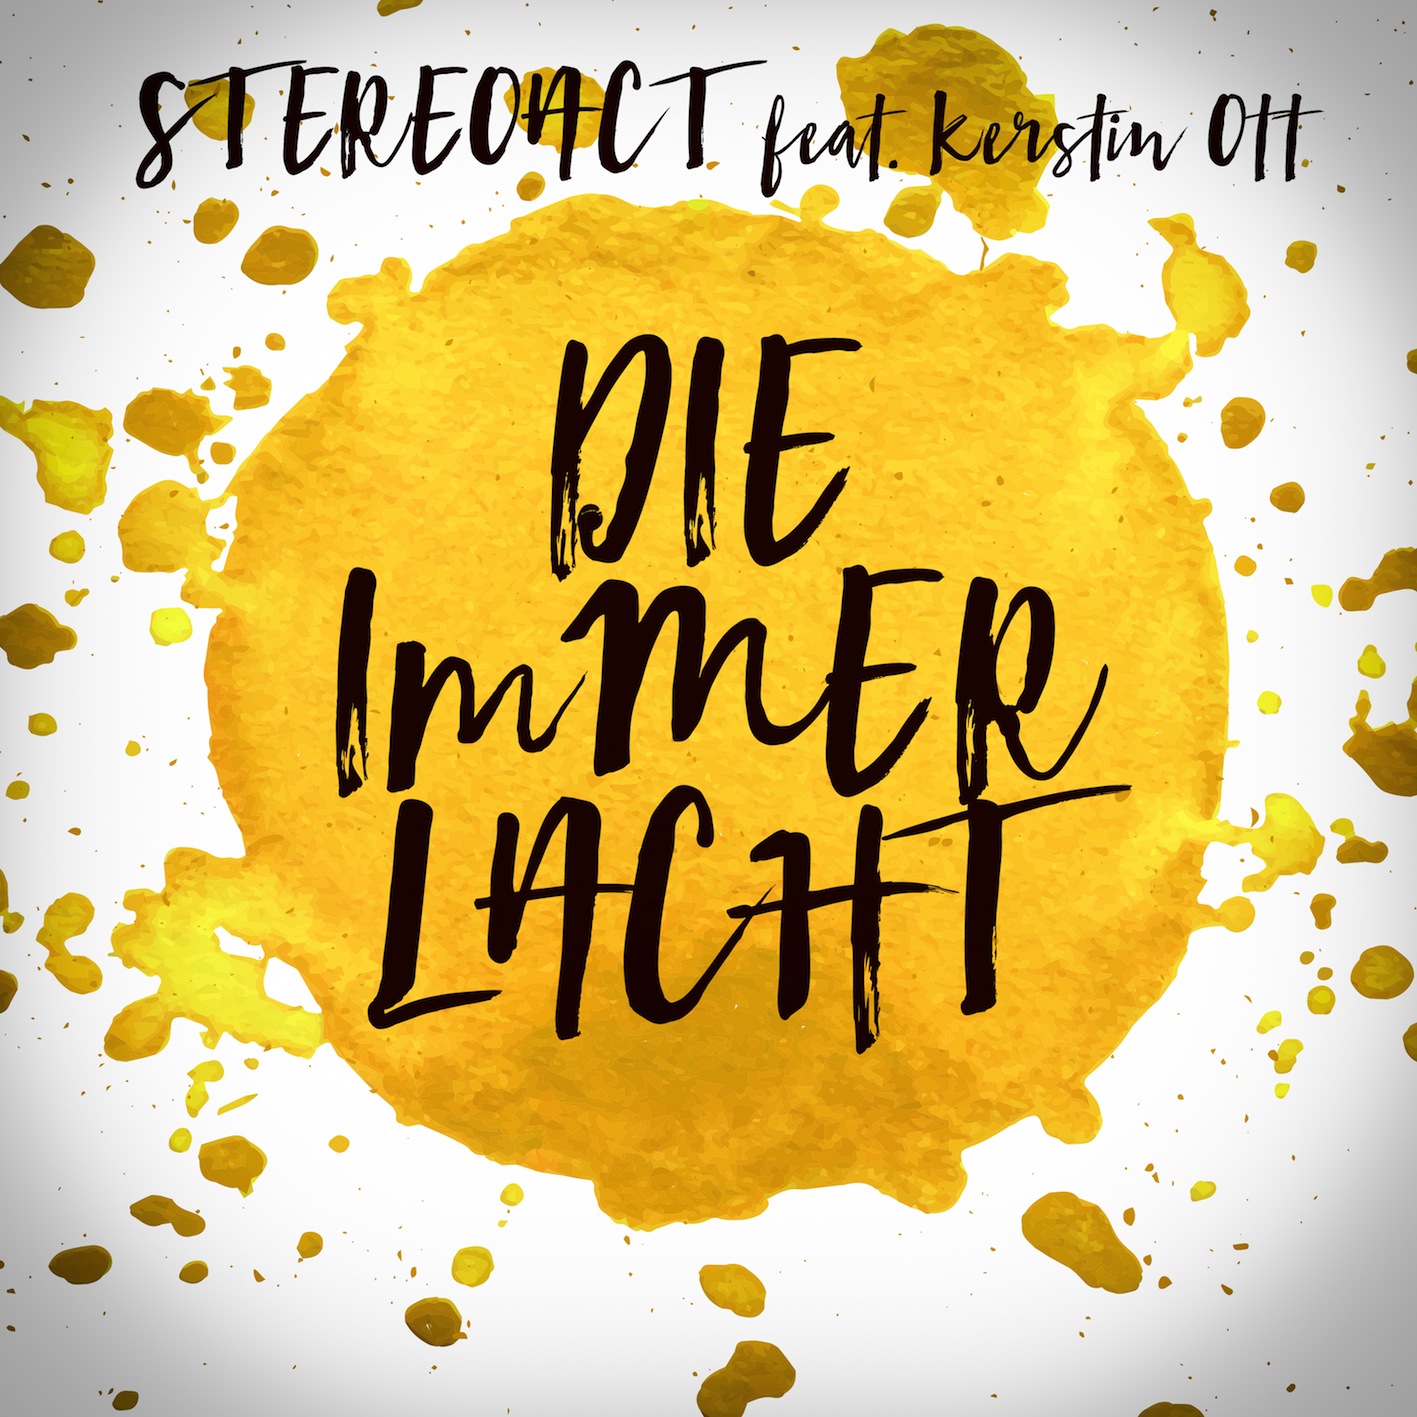 Stereoact Feat. Kerstin Ott - Die Immer Lacht